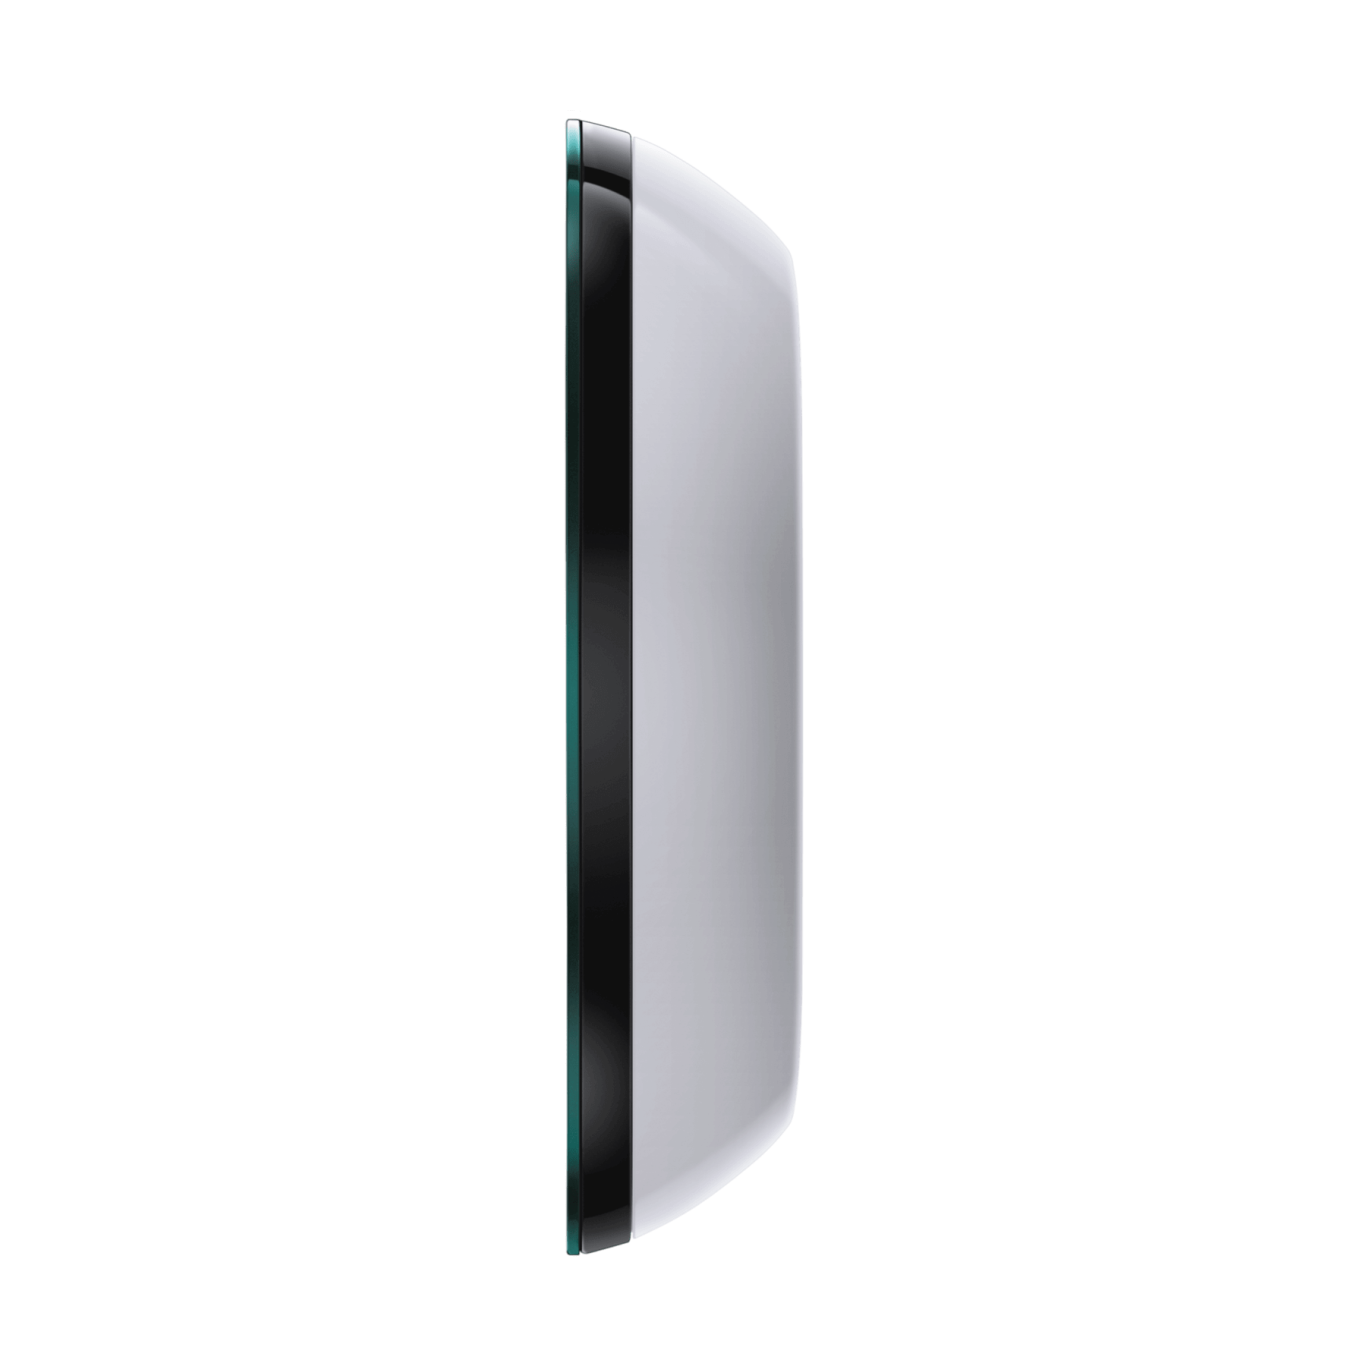 sleek thin smart thermostat